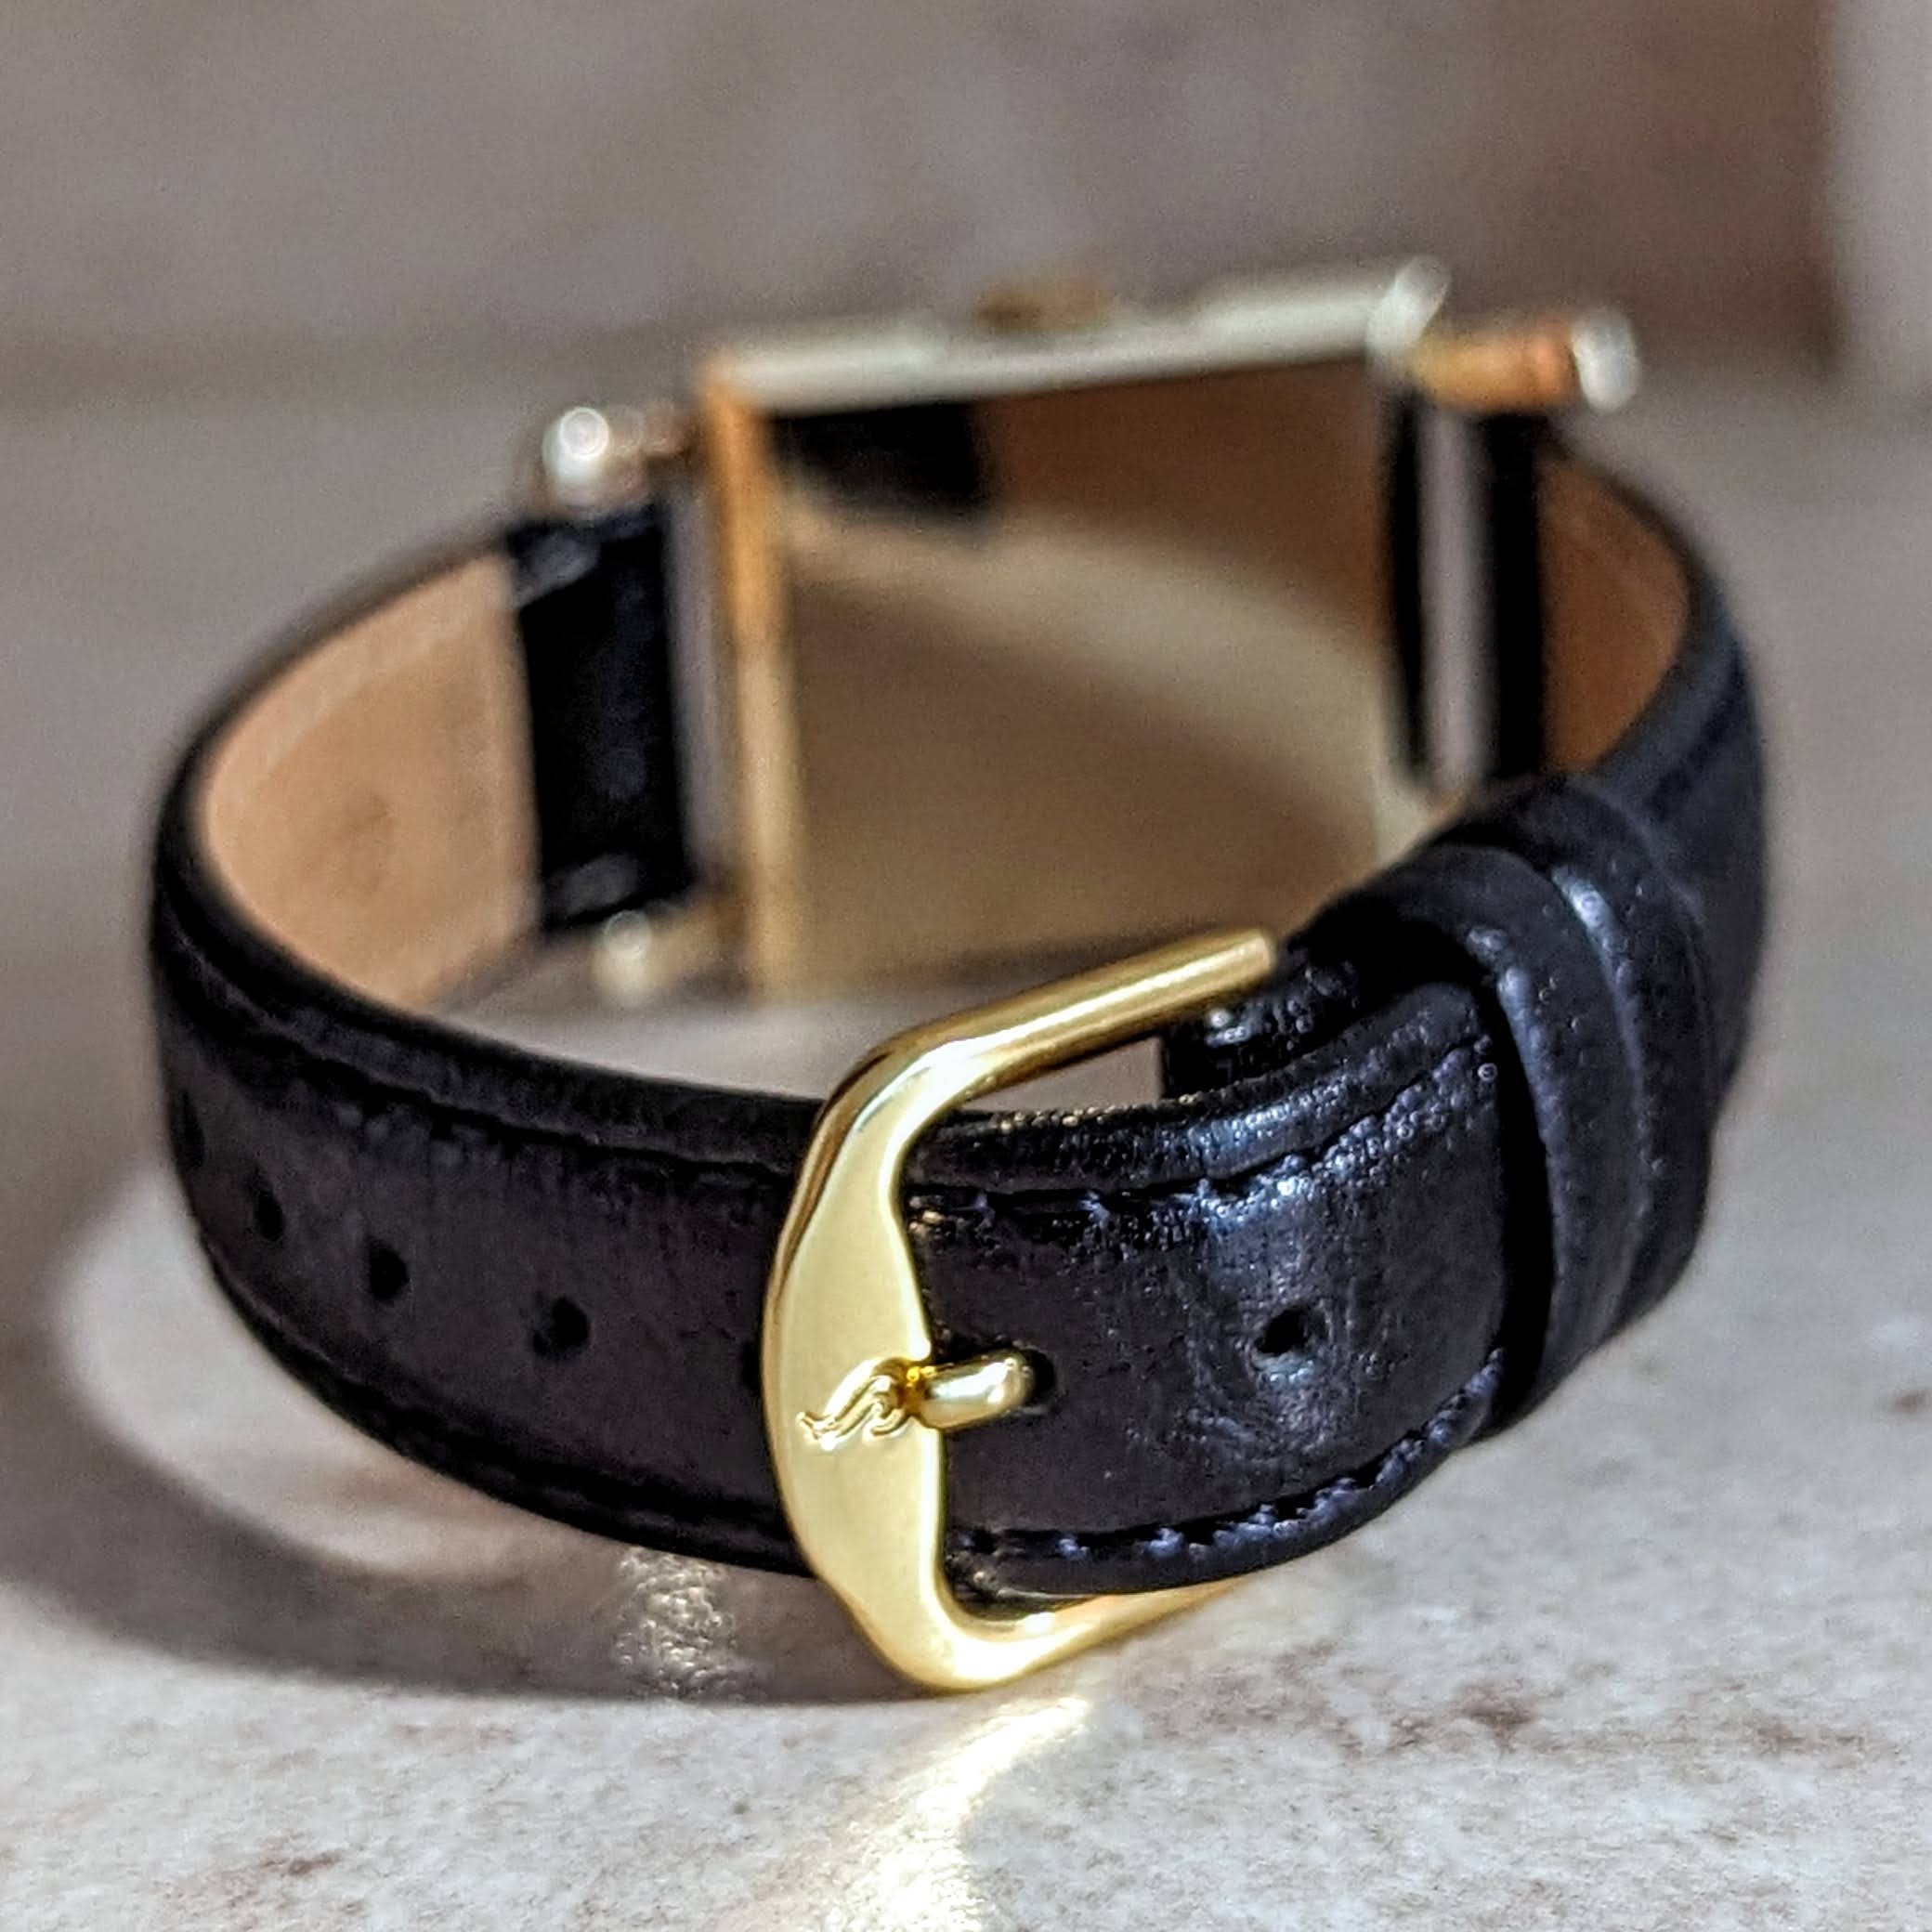 PAUL BREGUETTE Incabloc Watch 17 Jewels Swiss Made Vintage Wristwatch